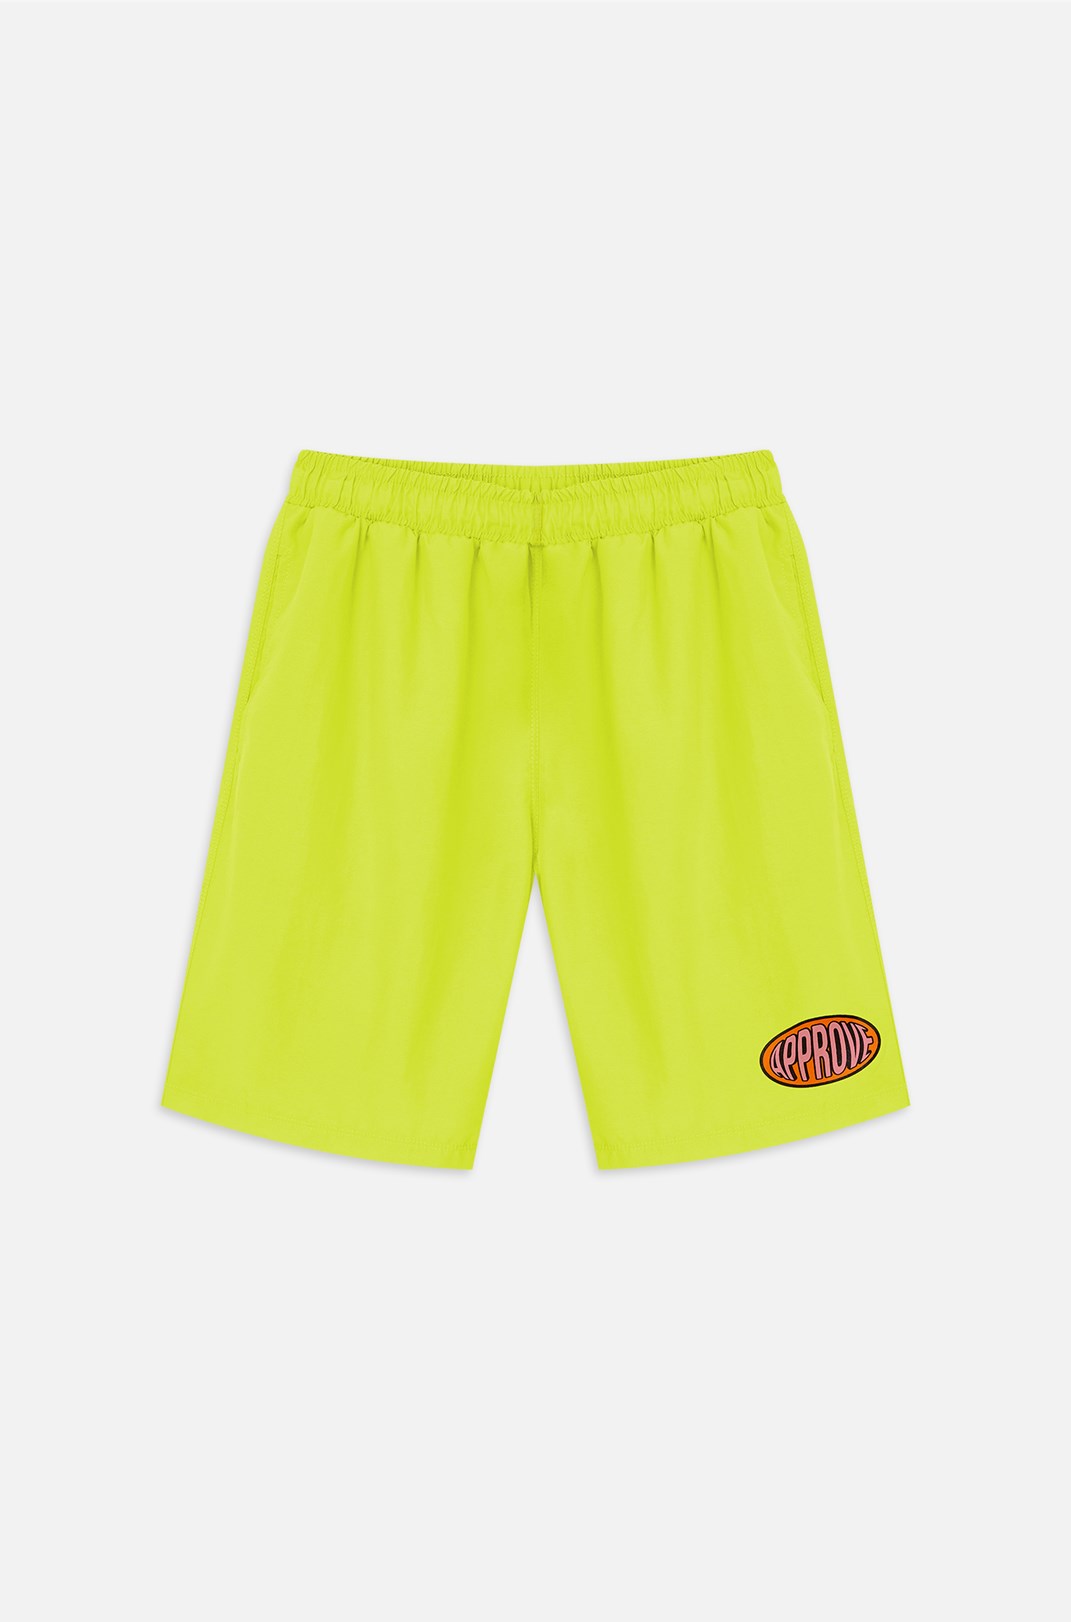 Shorts Approve Ur Summer Amarelo Neon